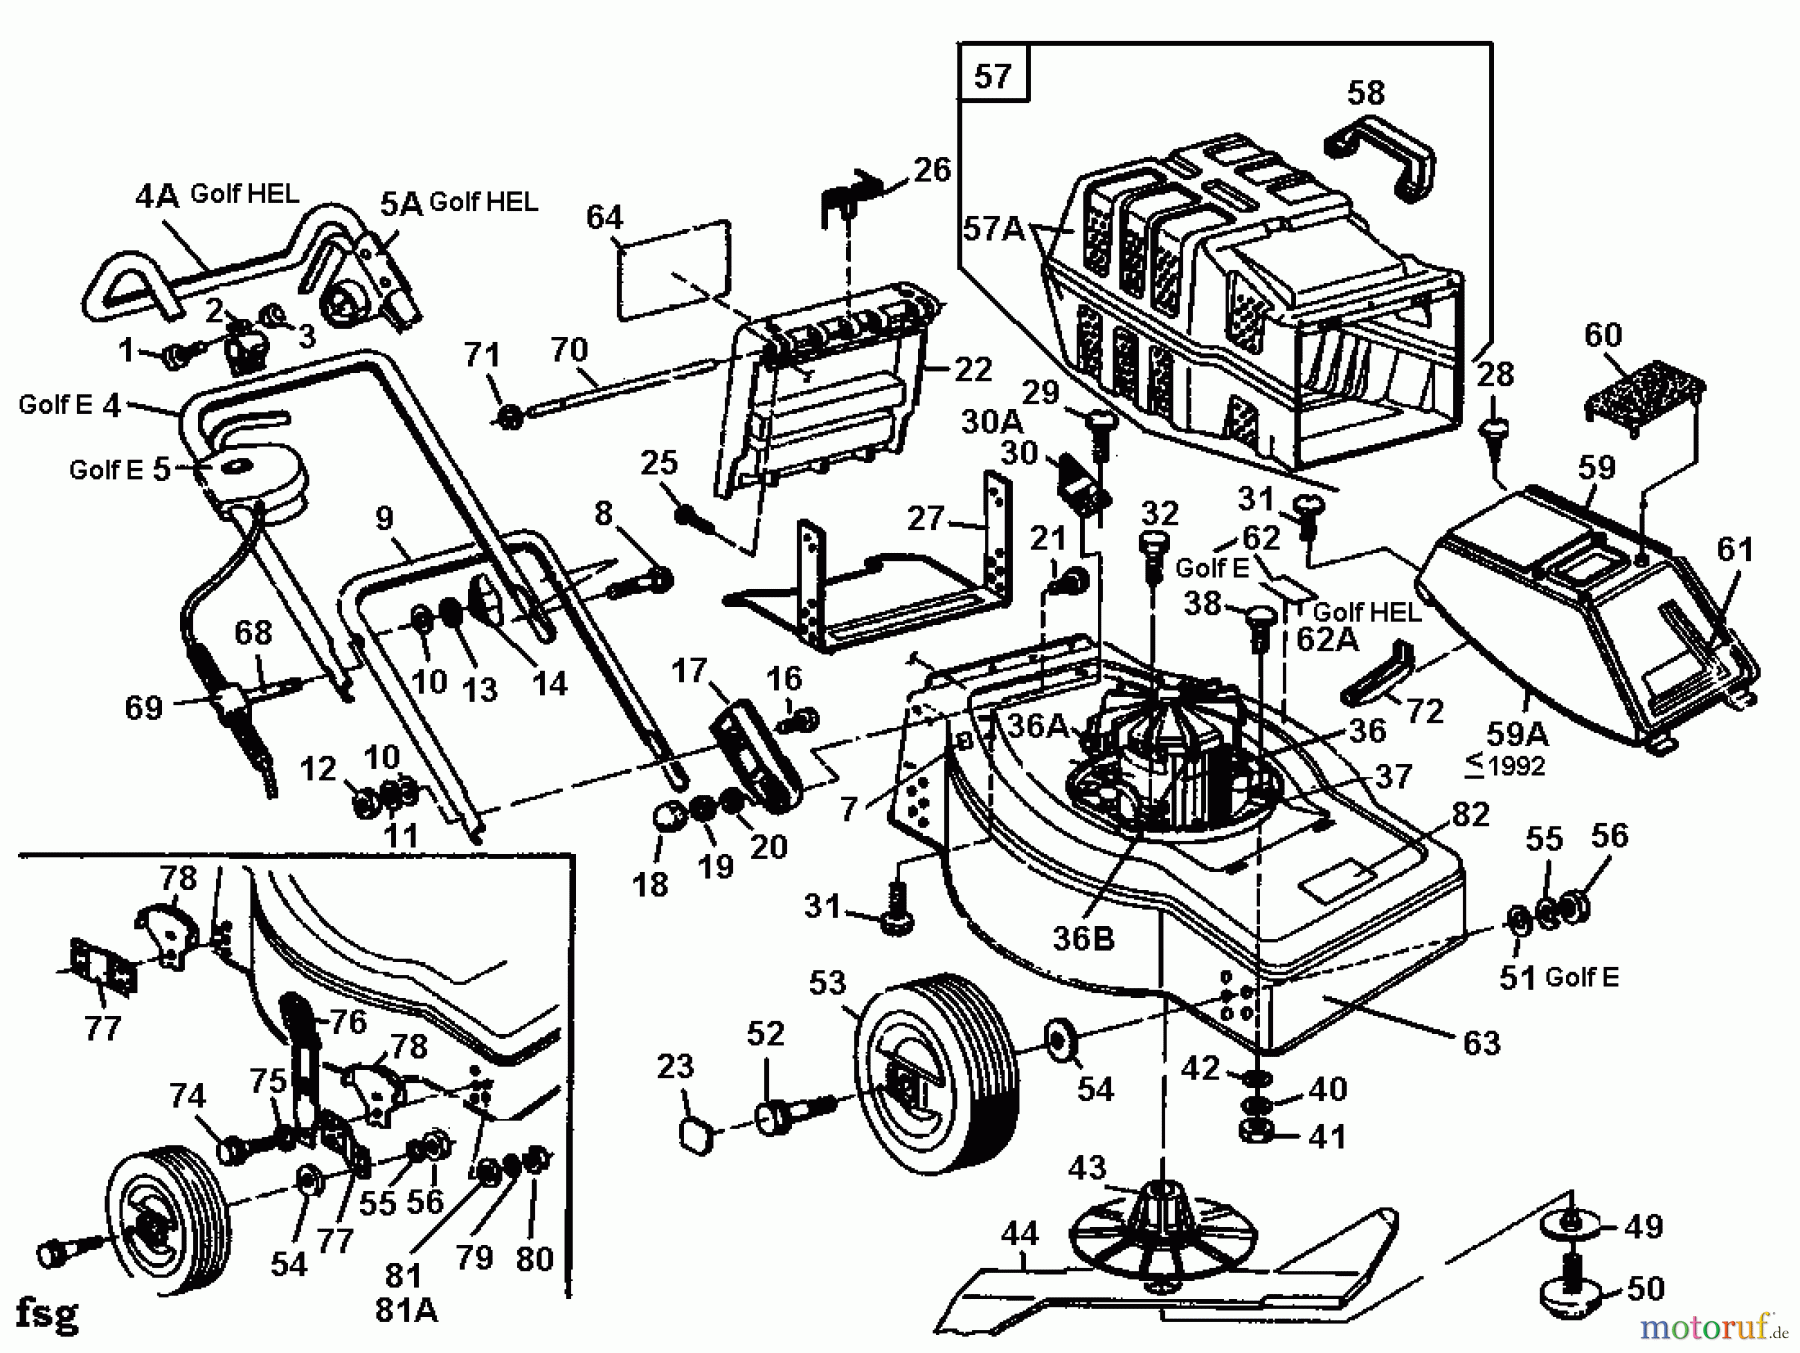  Golf Electric mower Golf E 02881.06  (1992) Basic machine